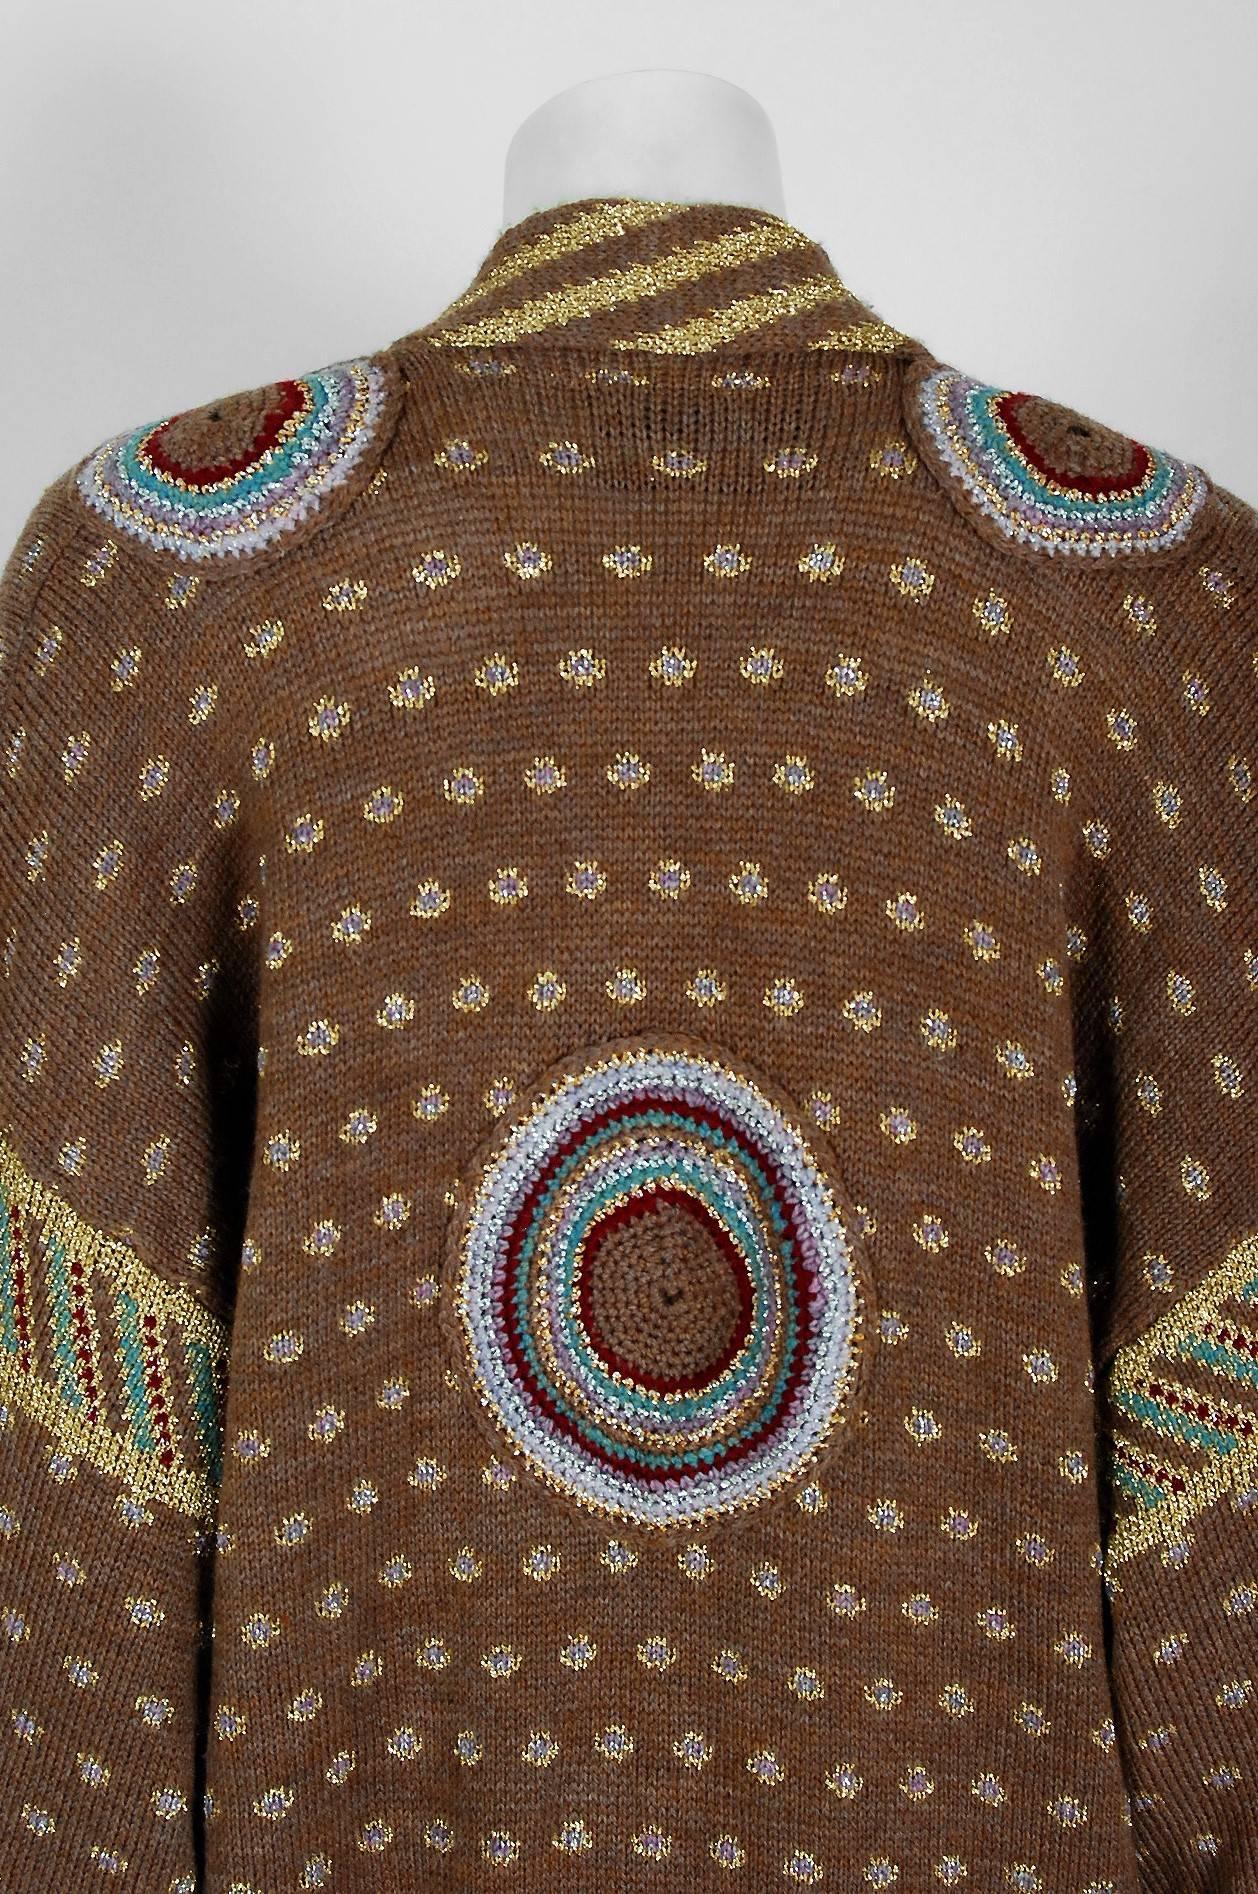 1974 Bill Gibbs Colorful Metallic Hand-Knit Wool Applique Kimono Sweater Jacket 2